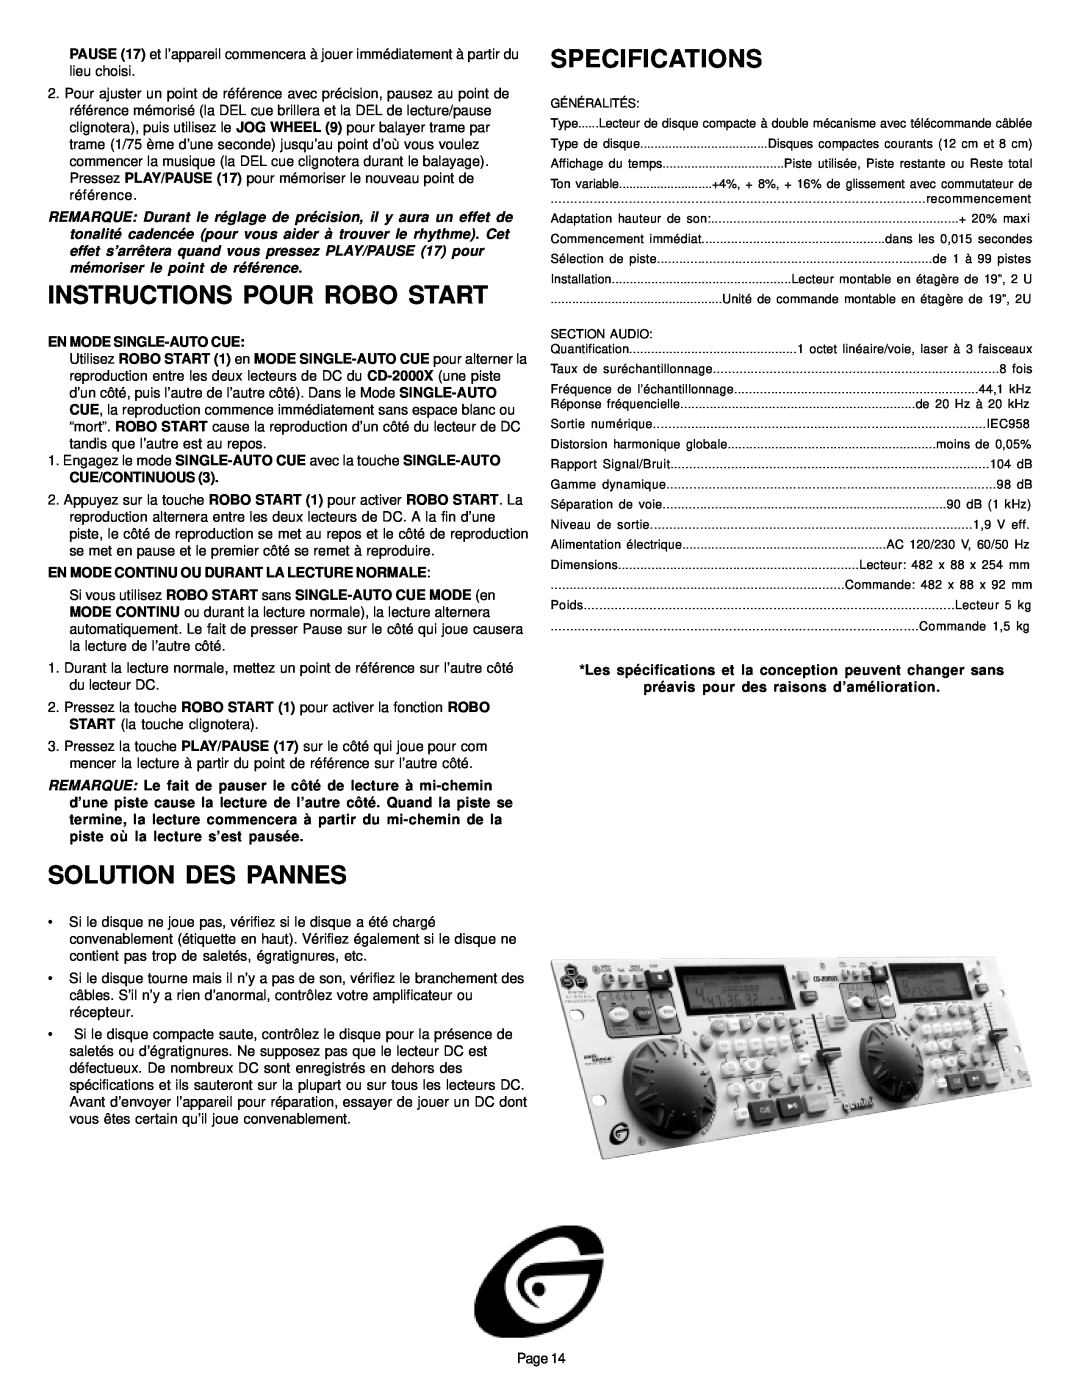 Gemini CD-2000X manual Instructions Pour Robo Start, Solution Des Pannes, Specifications 